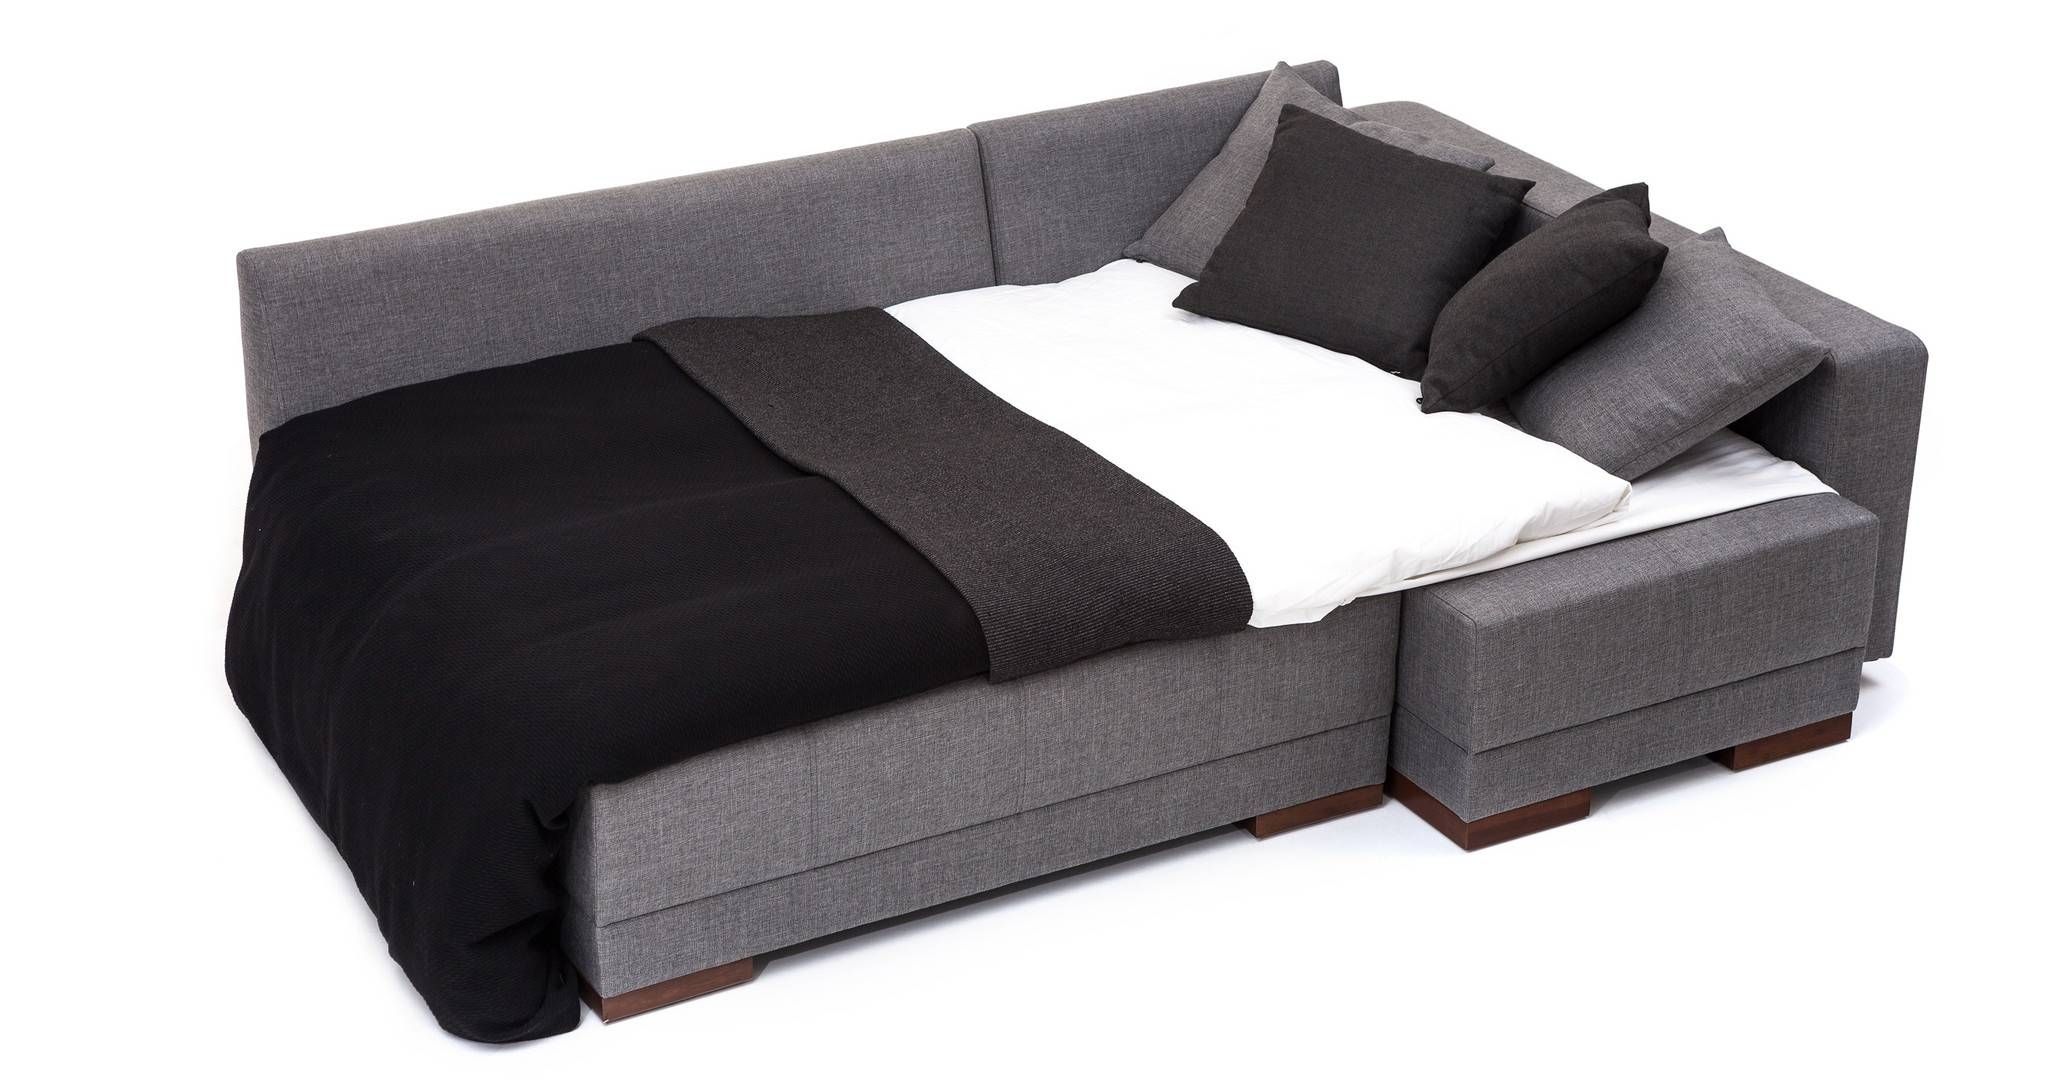 15 Best Ideas of Queen Size Convertible Sofa Beds